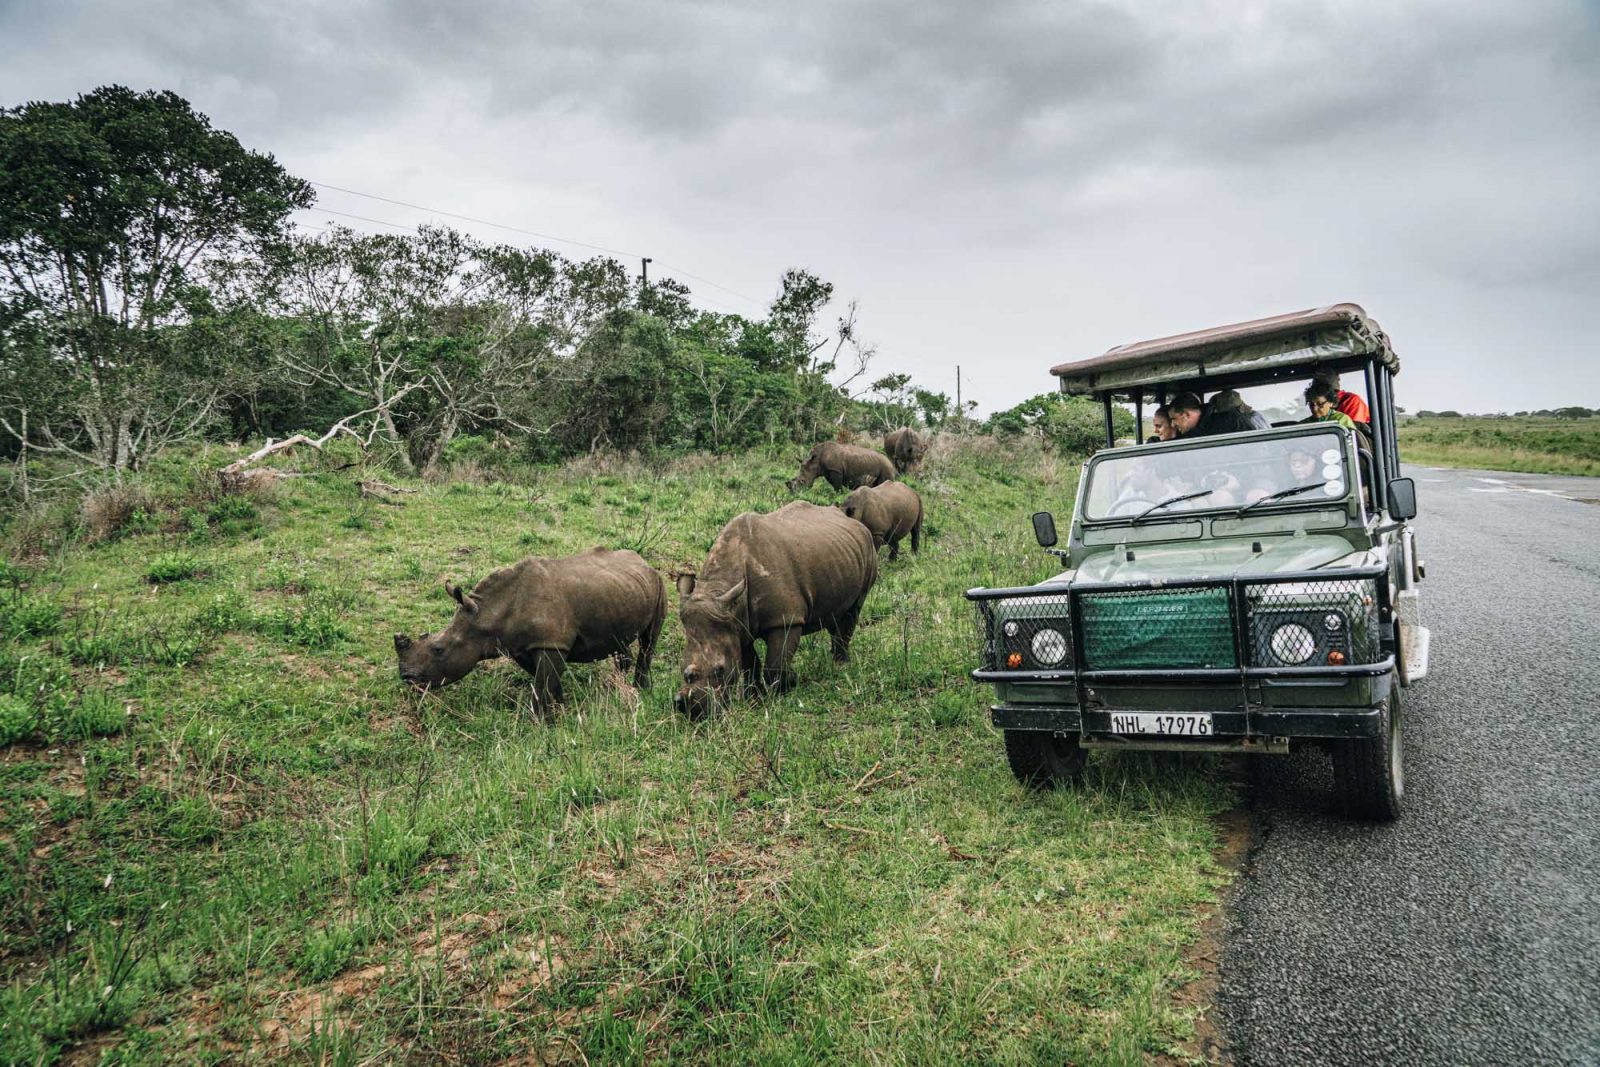 How to get to Virunga National park